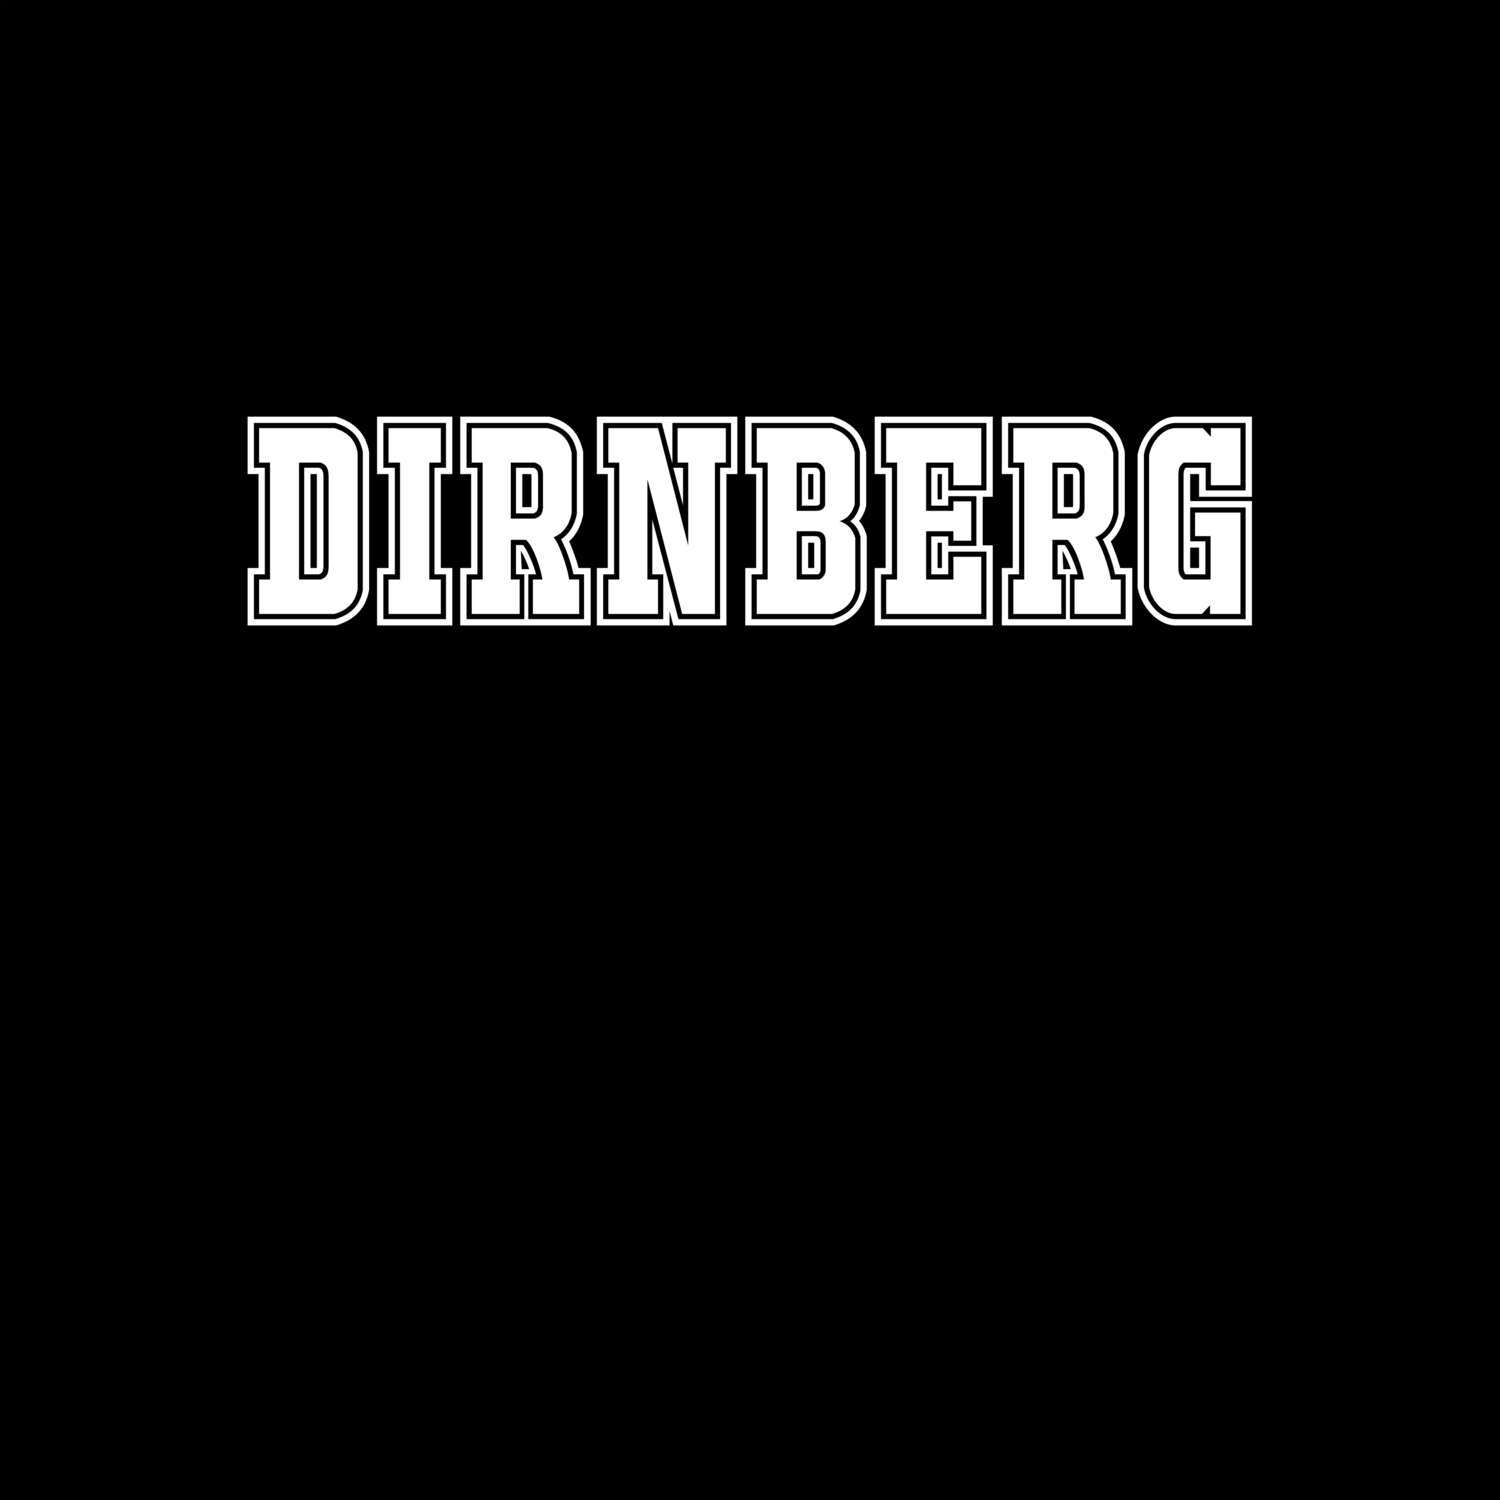 Dirnberg T-Shirt »Classic«